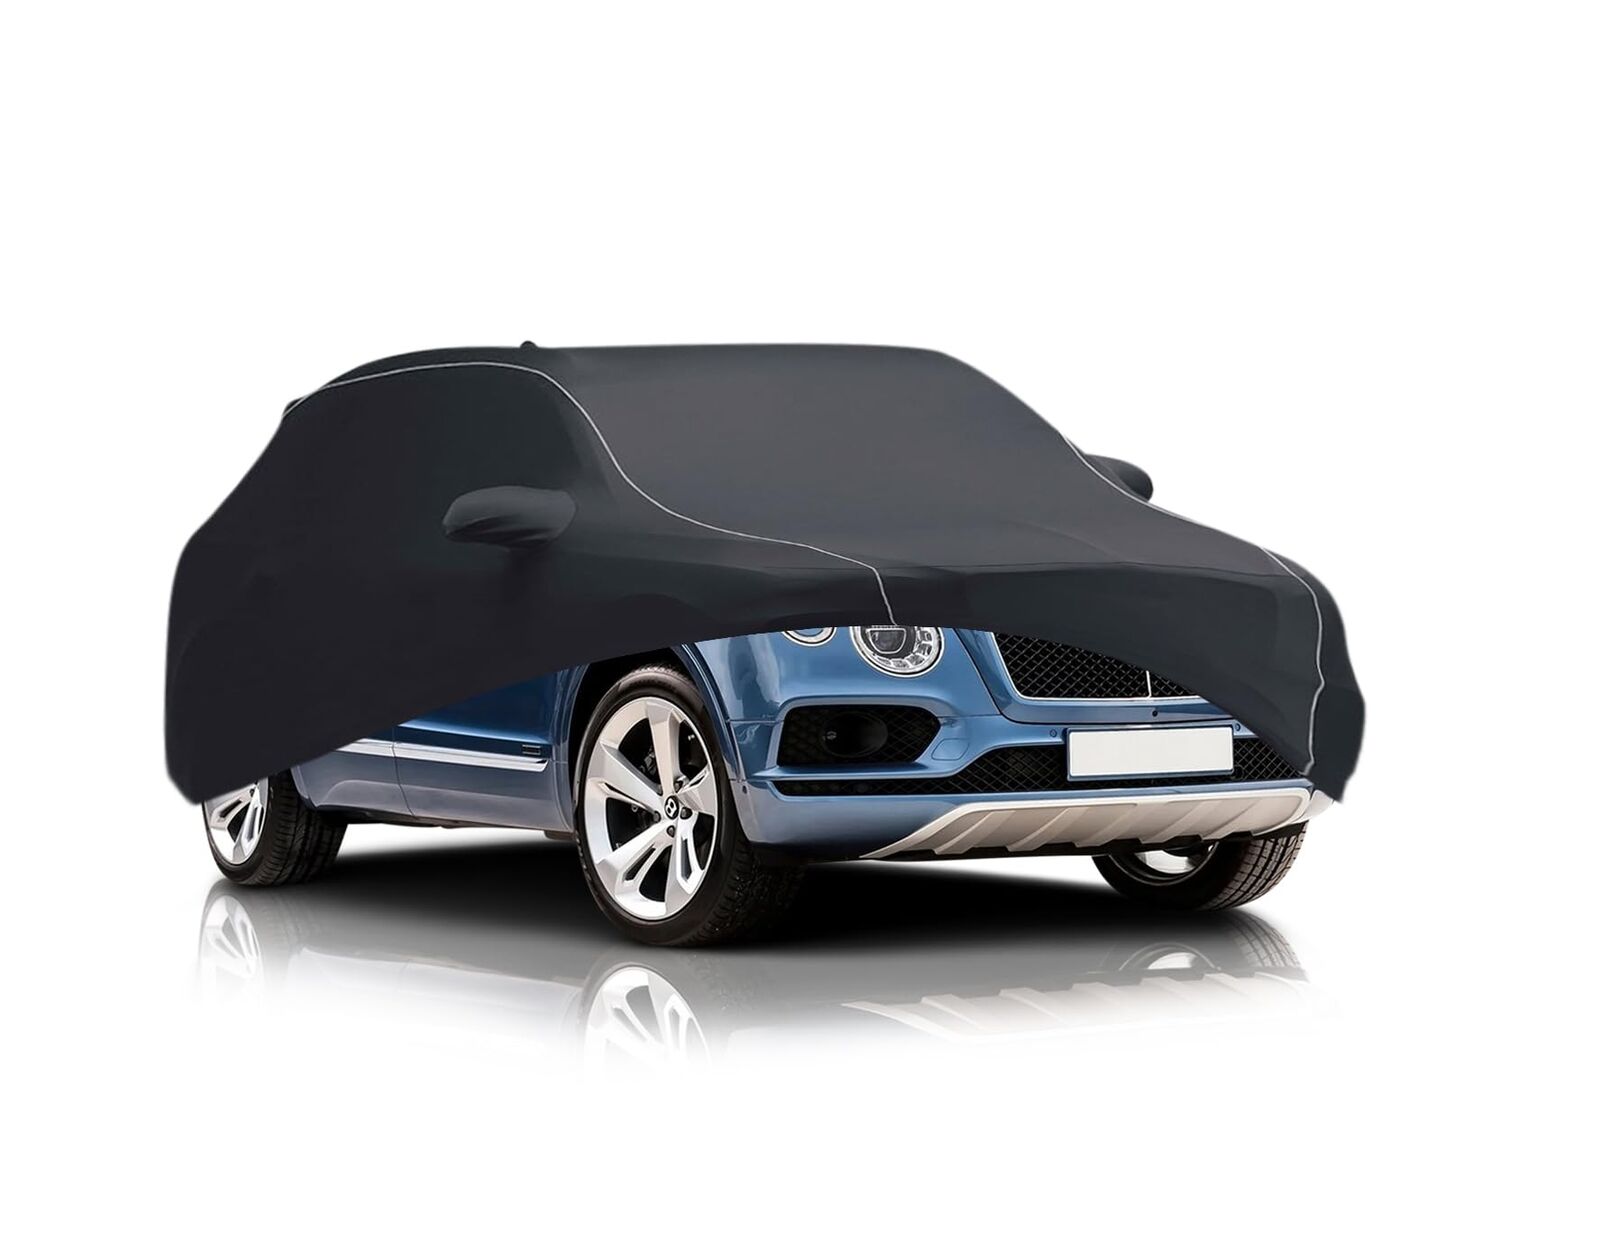 55tech Premium Indoor Covers for Bentley Bentayga SUV Garage Storage use, Luxury